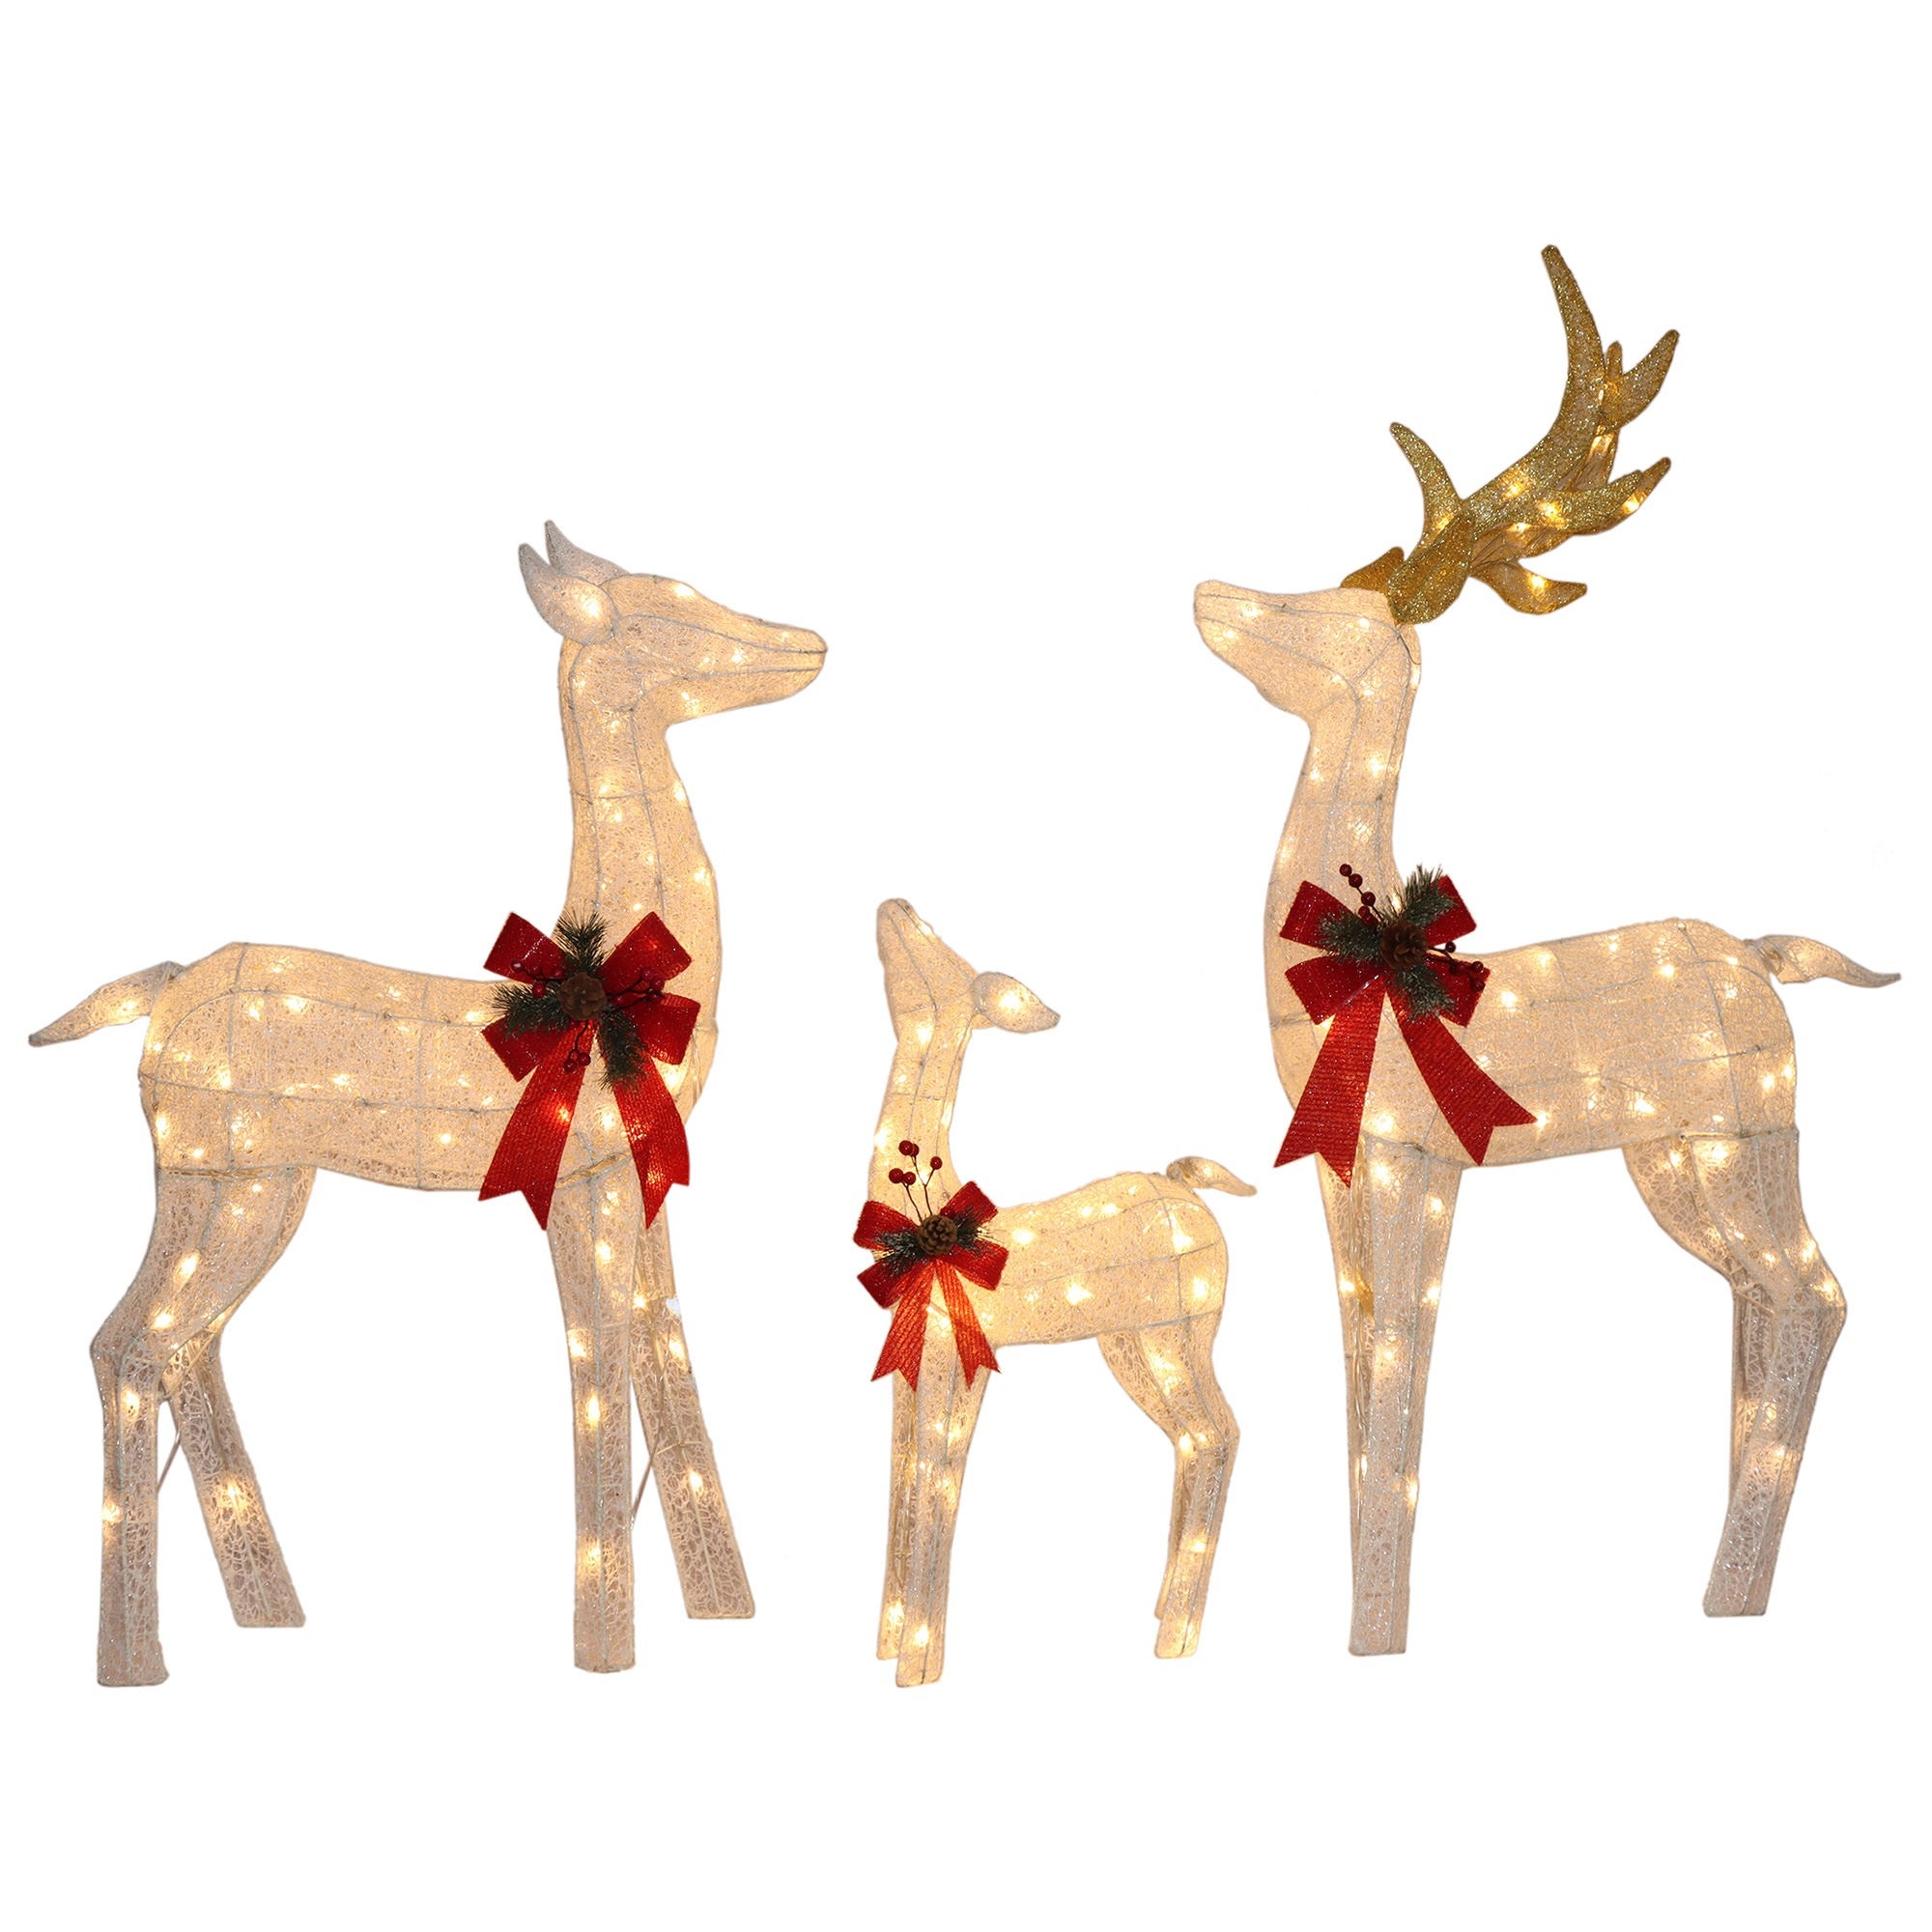 Norjav 3 Piece LED Light Up Outdoor Mesh Christmas Reindeer Family Figurine Set, White